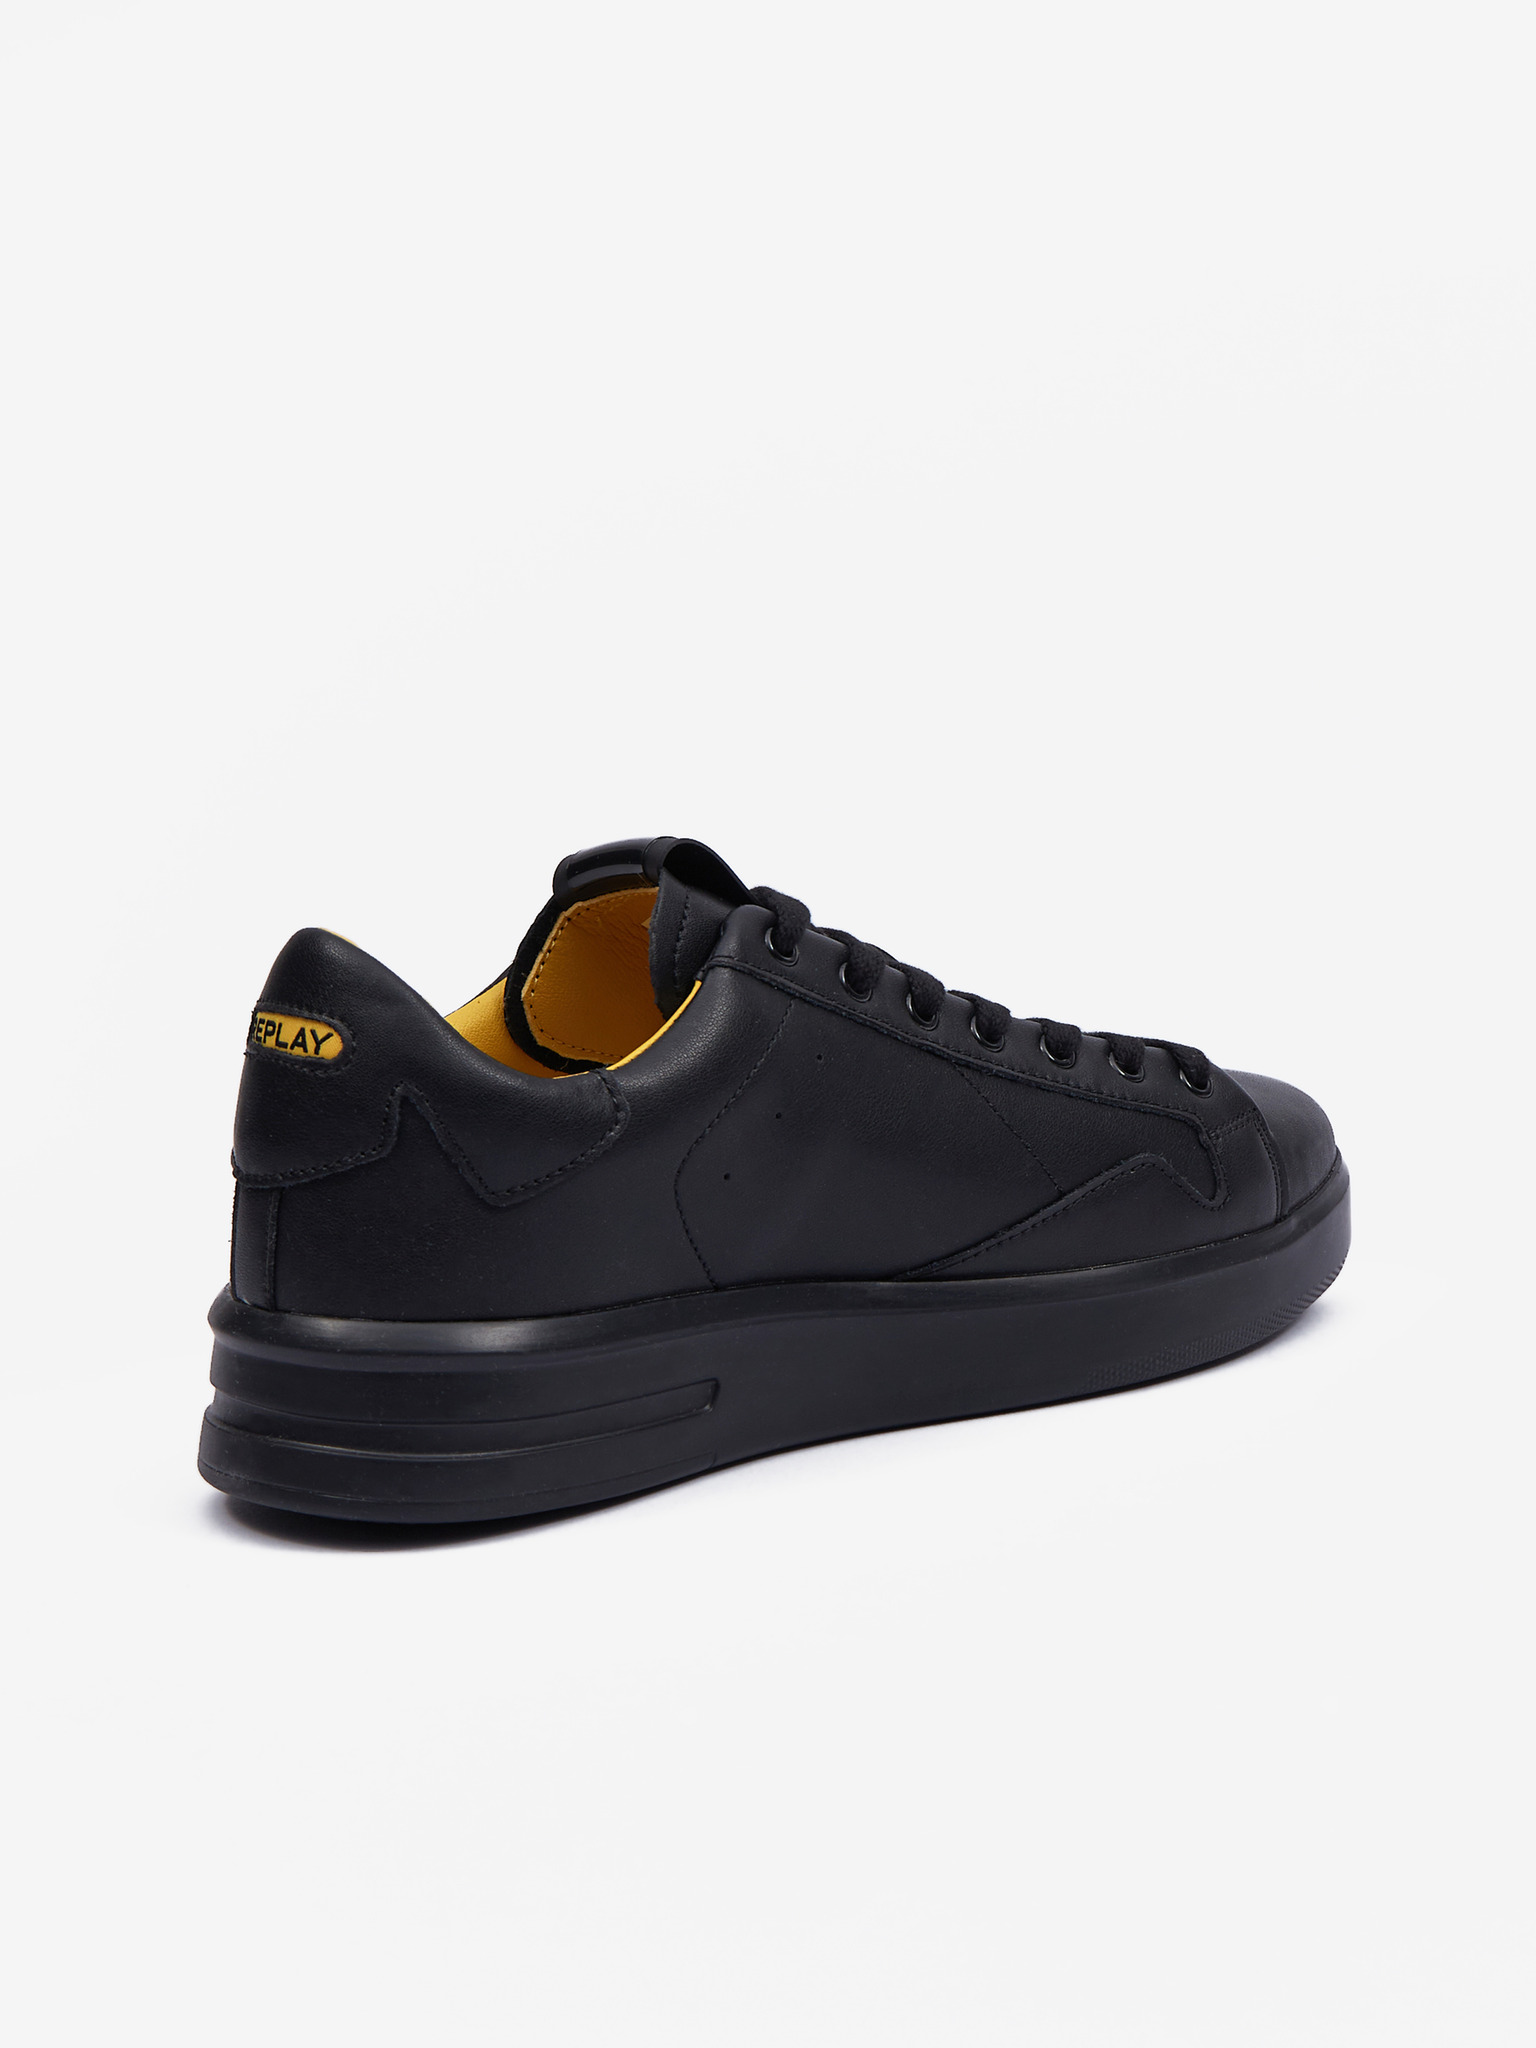  Replay Women's Low-Top Sneakers, Black 003 Black, 10